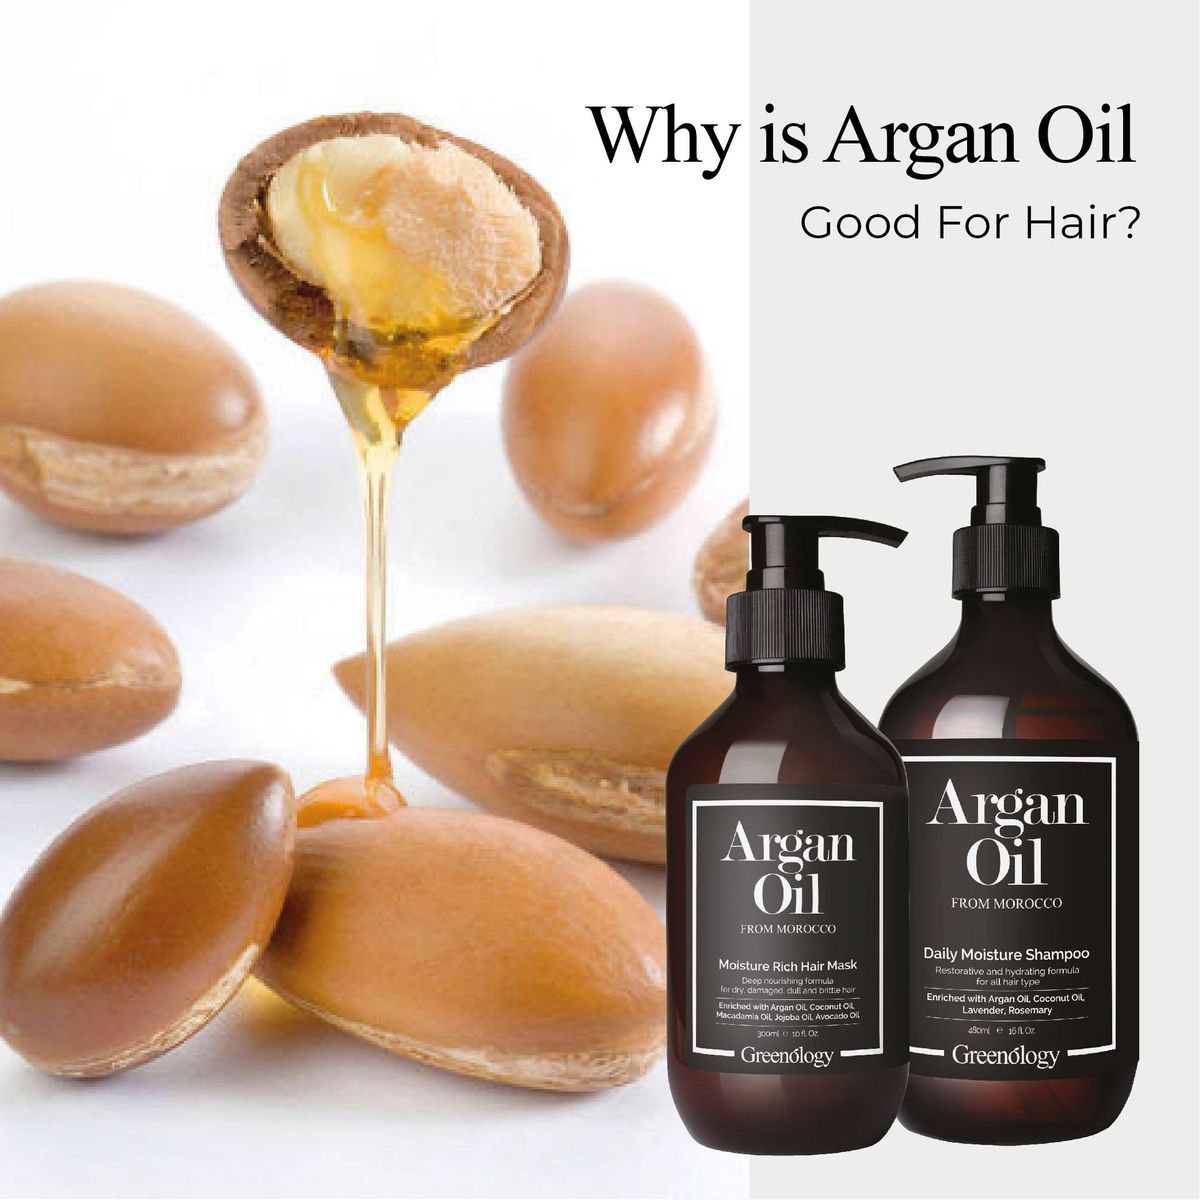 Why is Argan Oil Good For Hair?